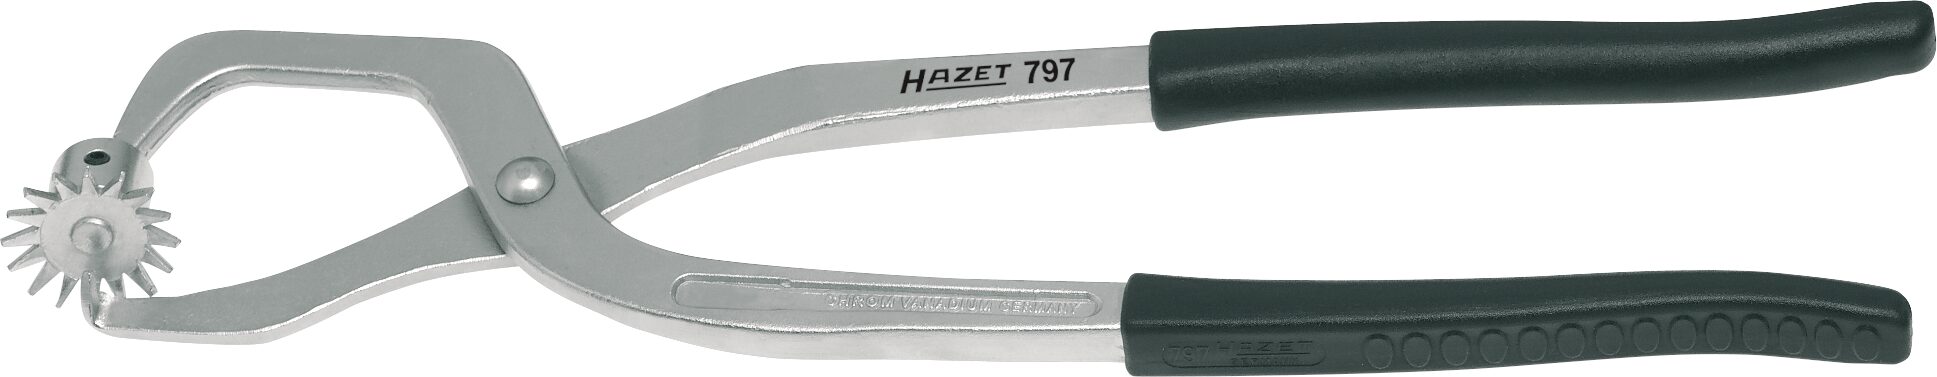 HAZET Bremsfedern-Zange 797